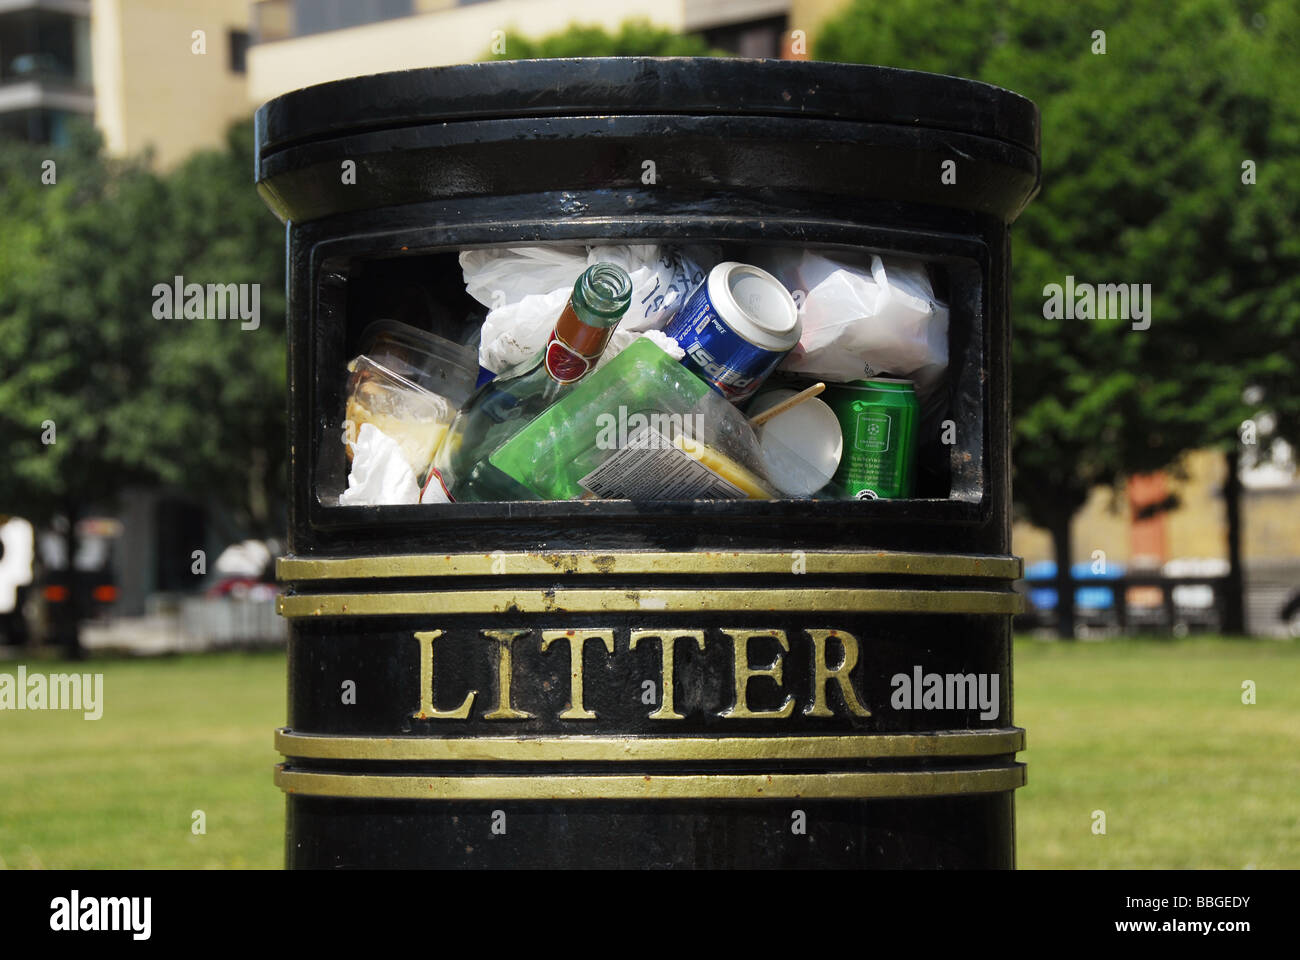 Full litter bin in a London park Stock Photo